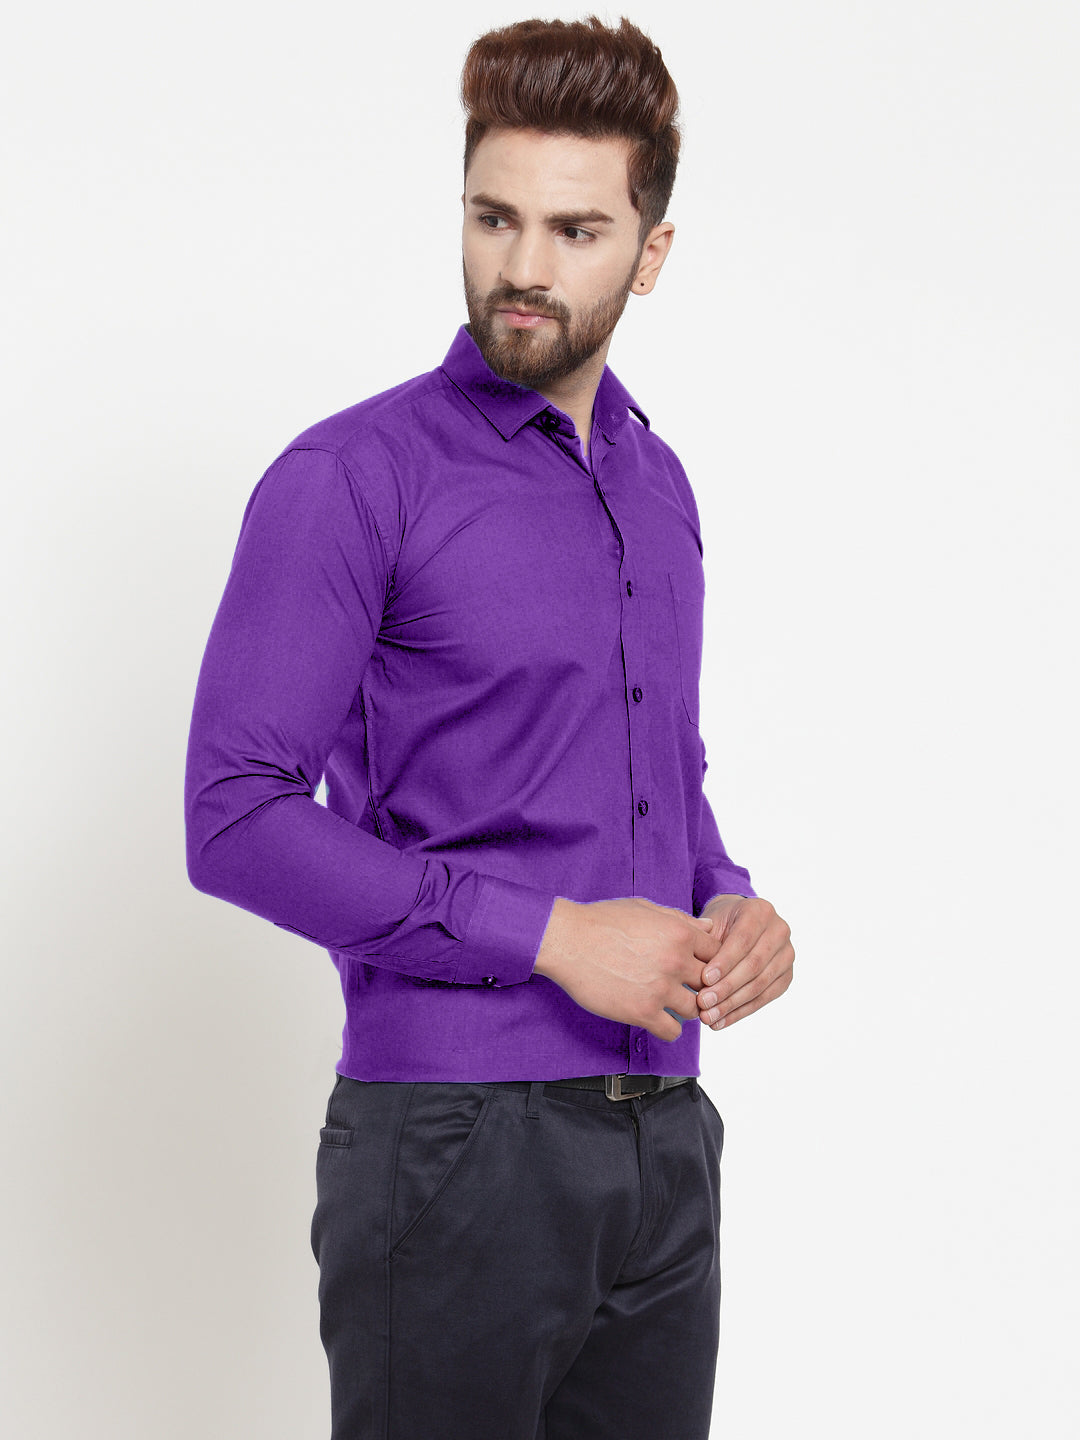 Men's Cotton Solid Purple Formal Shirt's ( SF 361Purple ) - Jainish